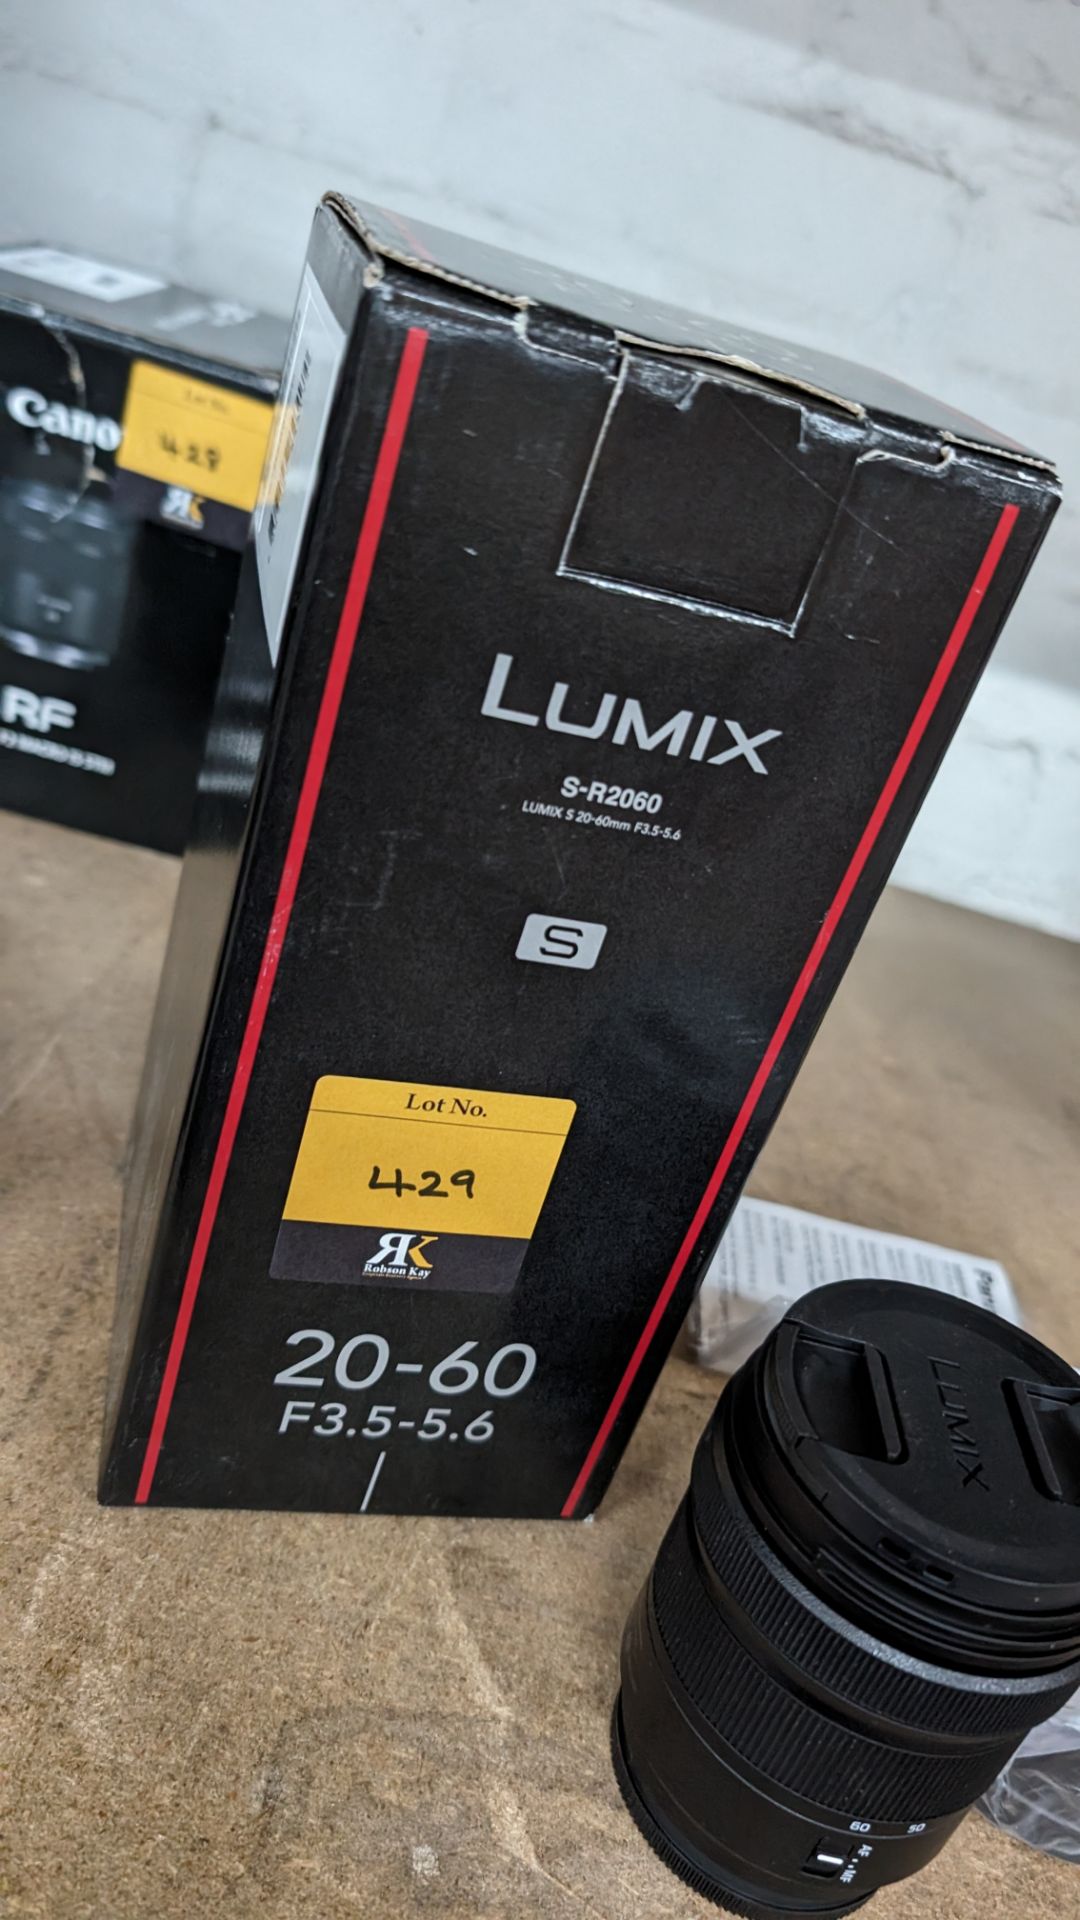 Panasonic Lumix model S-R2060 lens, 20-60mm, f3.5-5.6 - Image 11 of 14